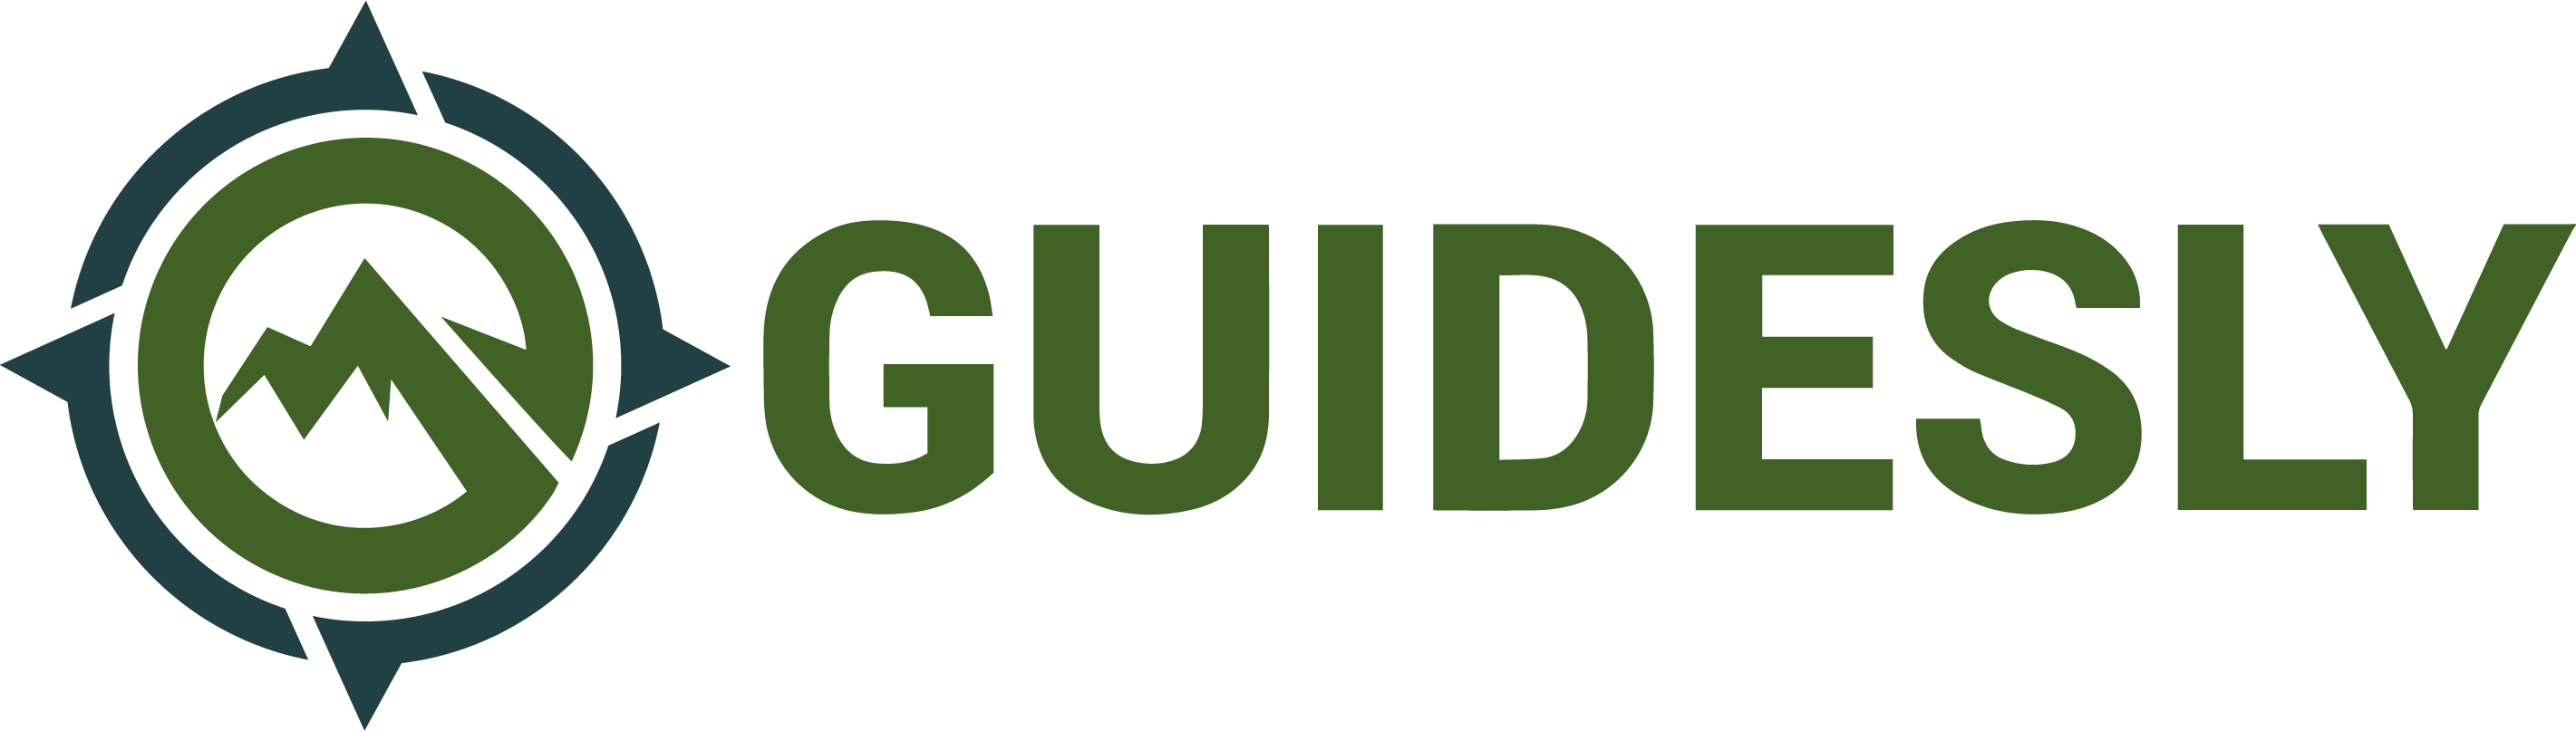 Guidesly logo